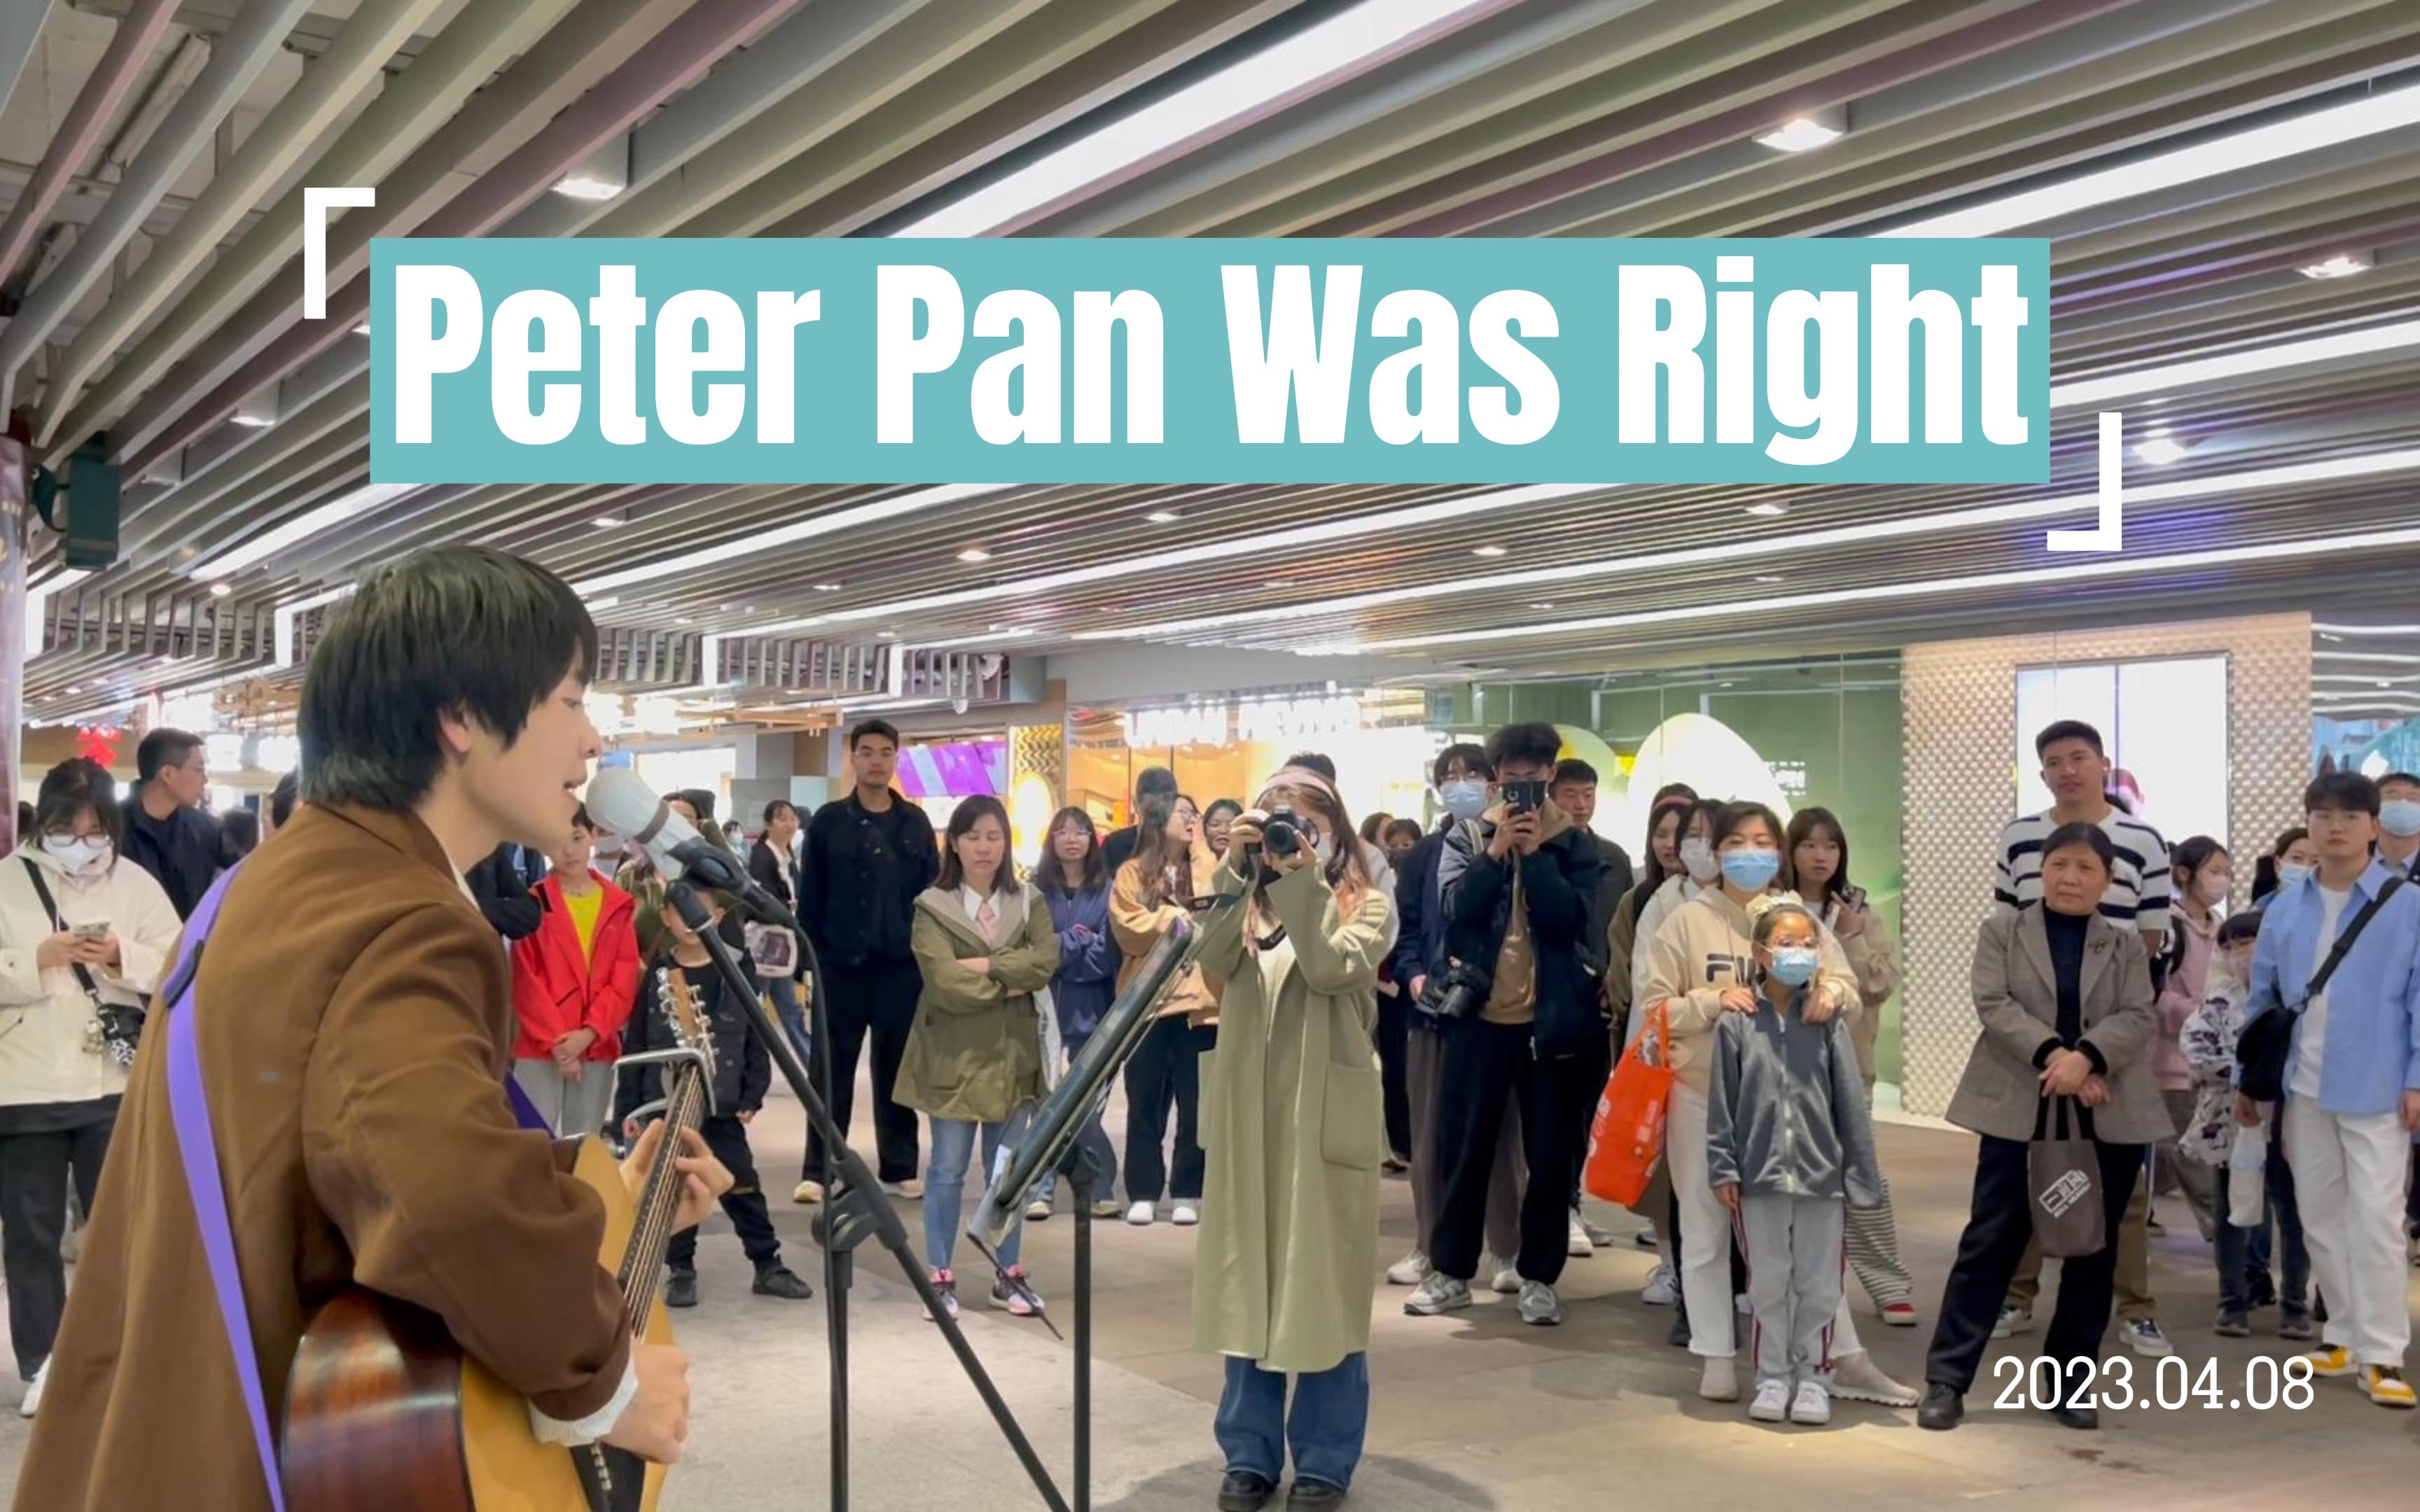 【Peter Pan Was Right】成都天府广场街头路演，非常治愈的一首歌啊！cover：Anson seabra